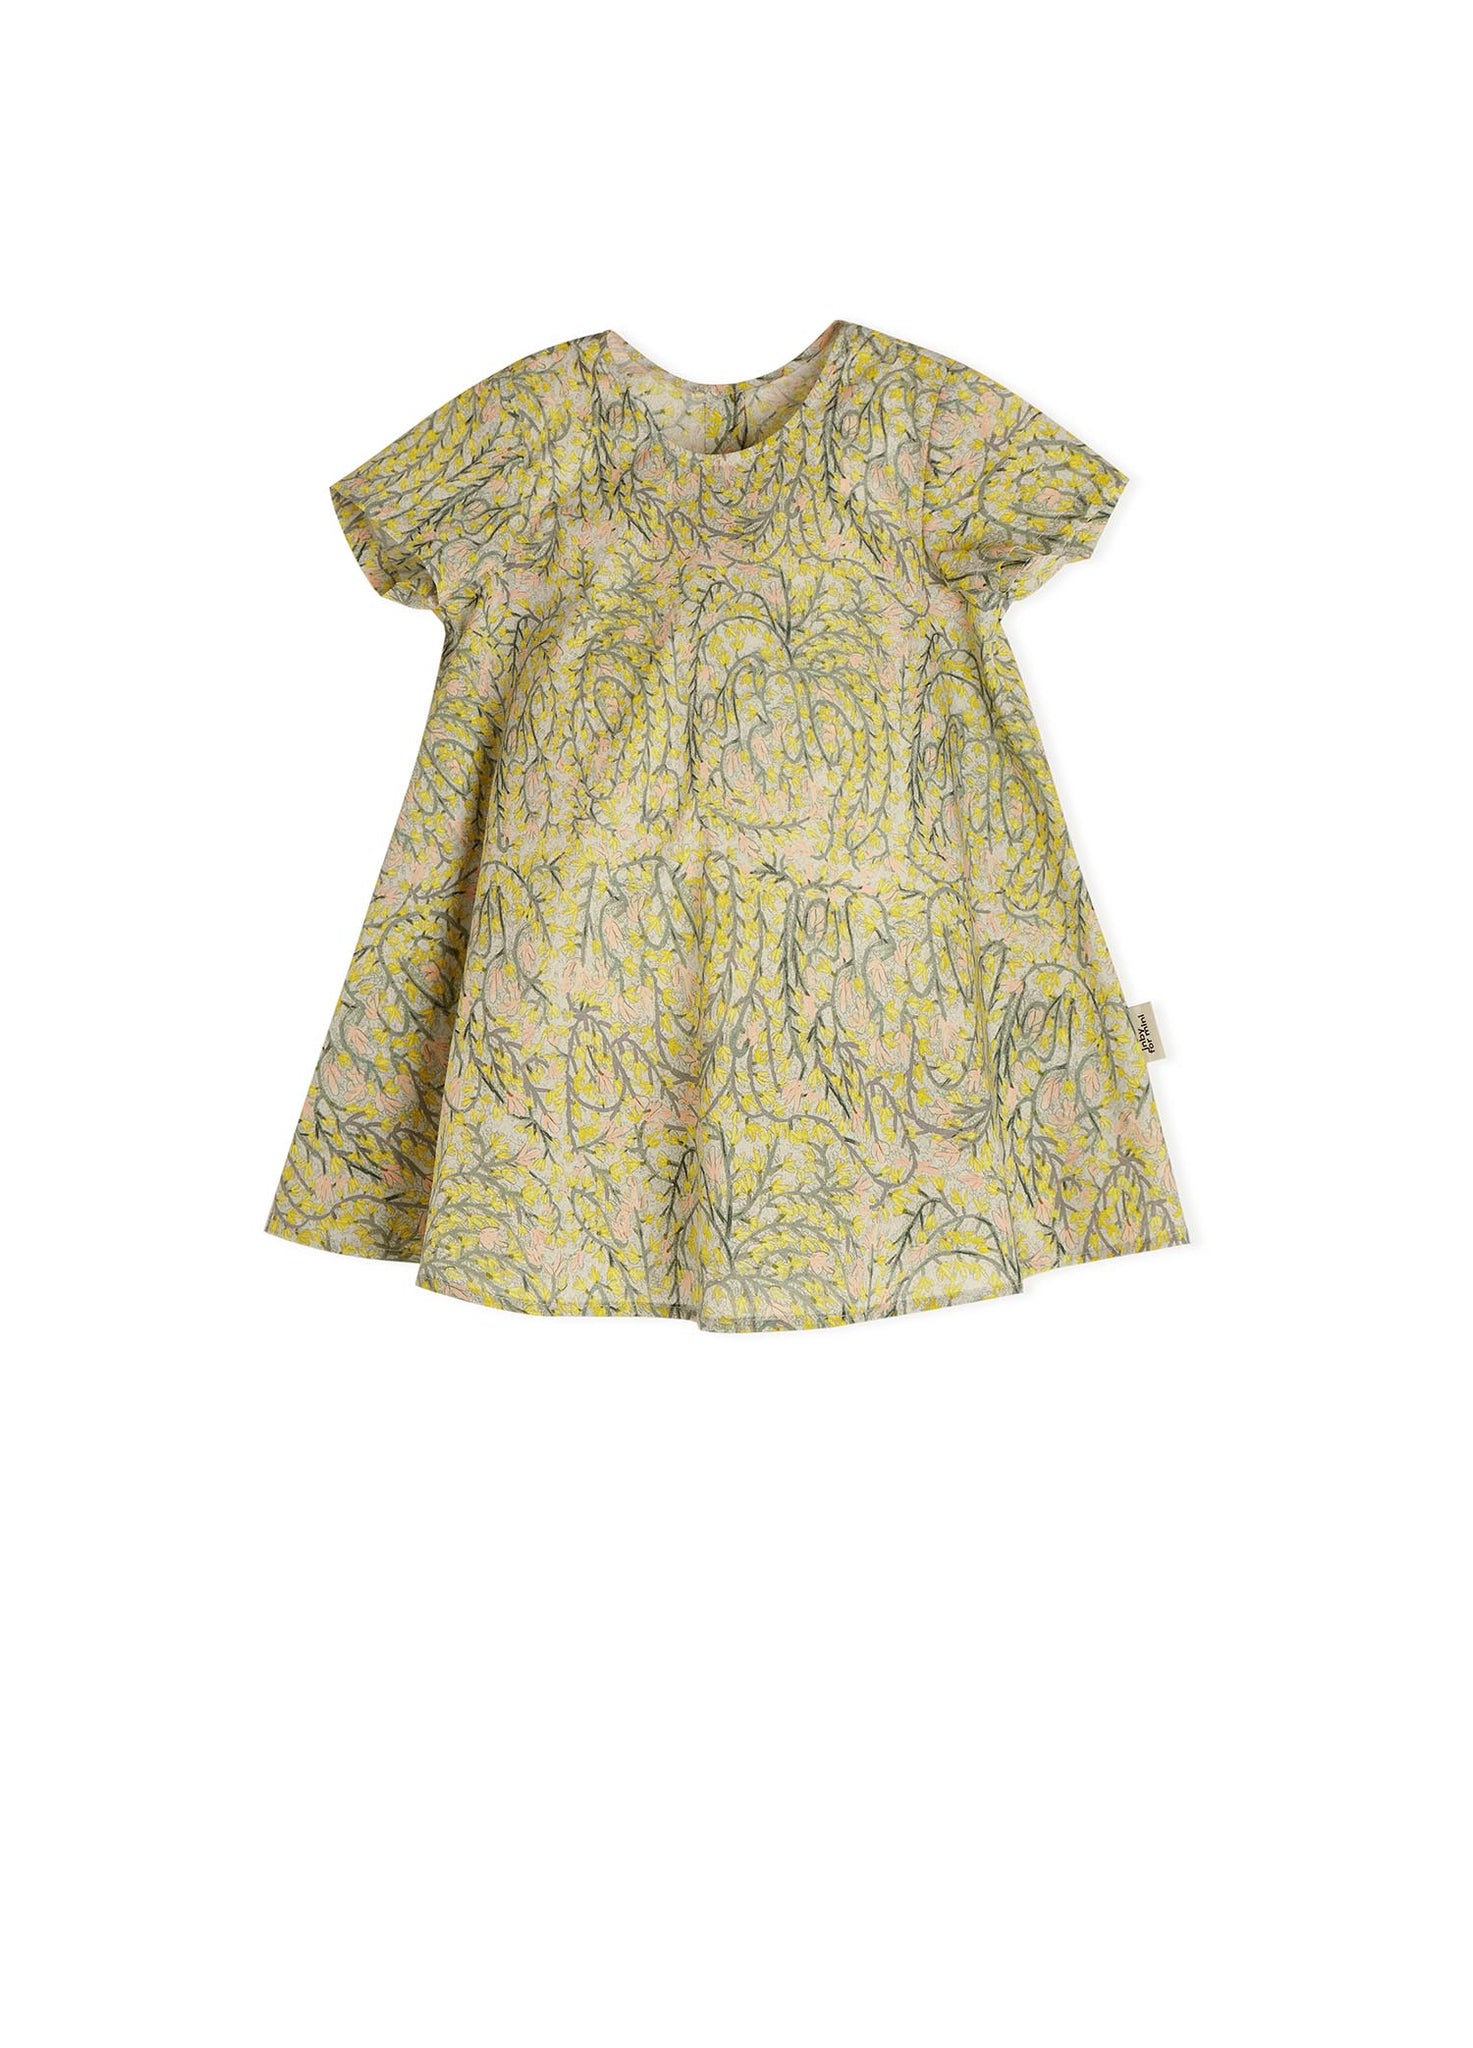 Dresses / jnby for mini Full Floral Print Short Sleeve Dress for Babies (100% Cotton)